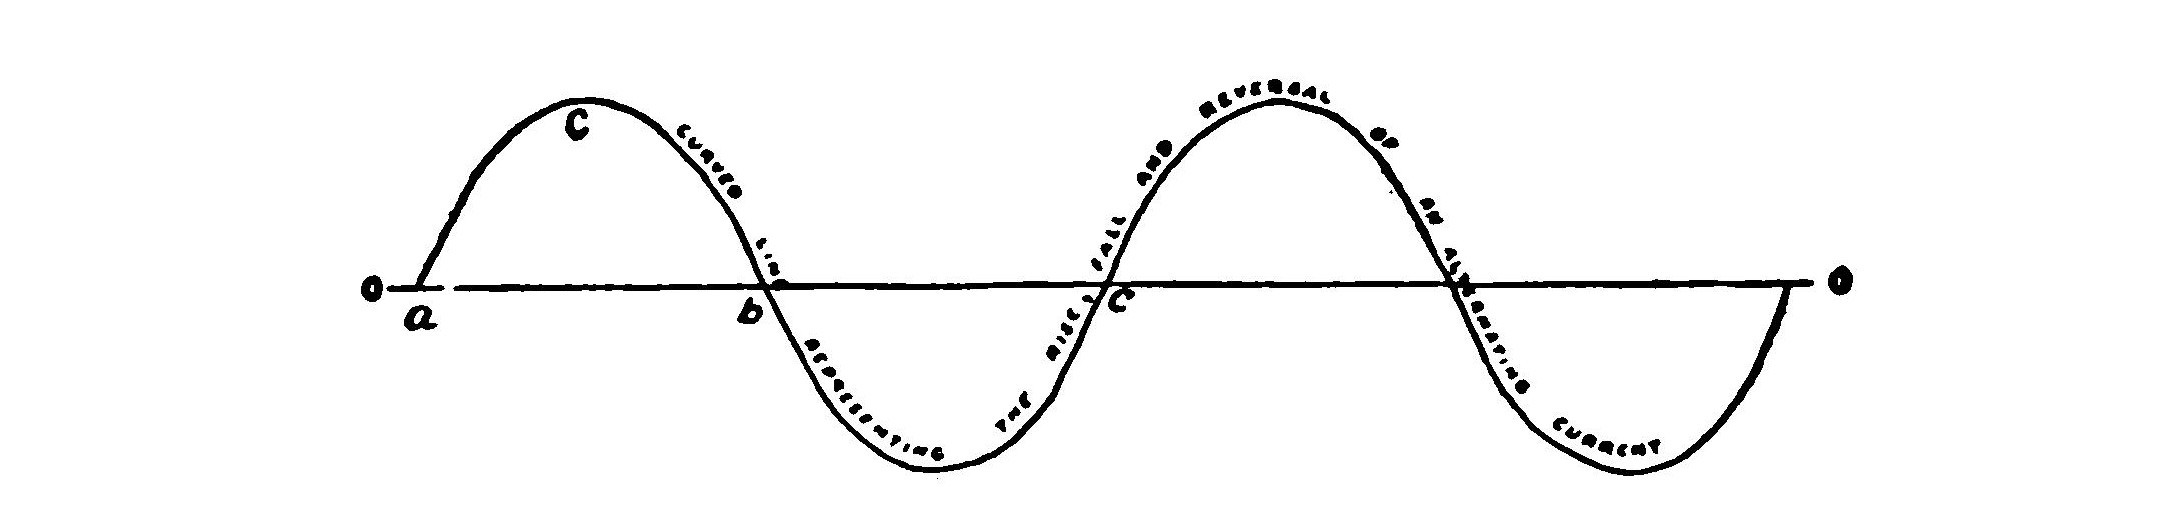 FIG. 41.—Diagram representing alternating current.